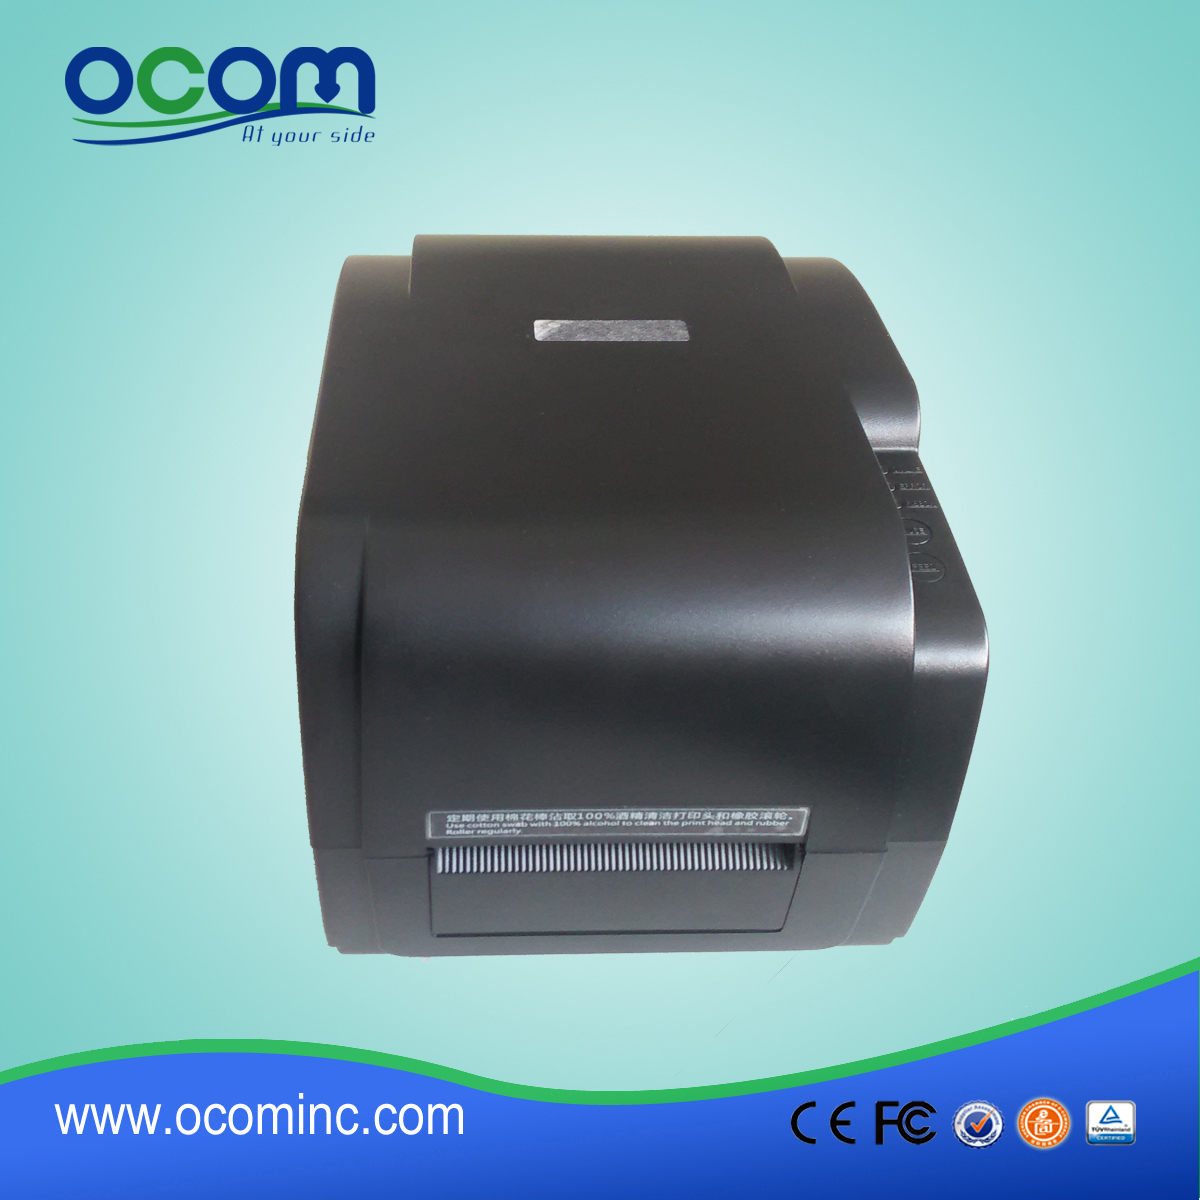 Thermal Transfer et Direct Thermal Label Printer OCBP-003 Fabricant